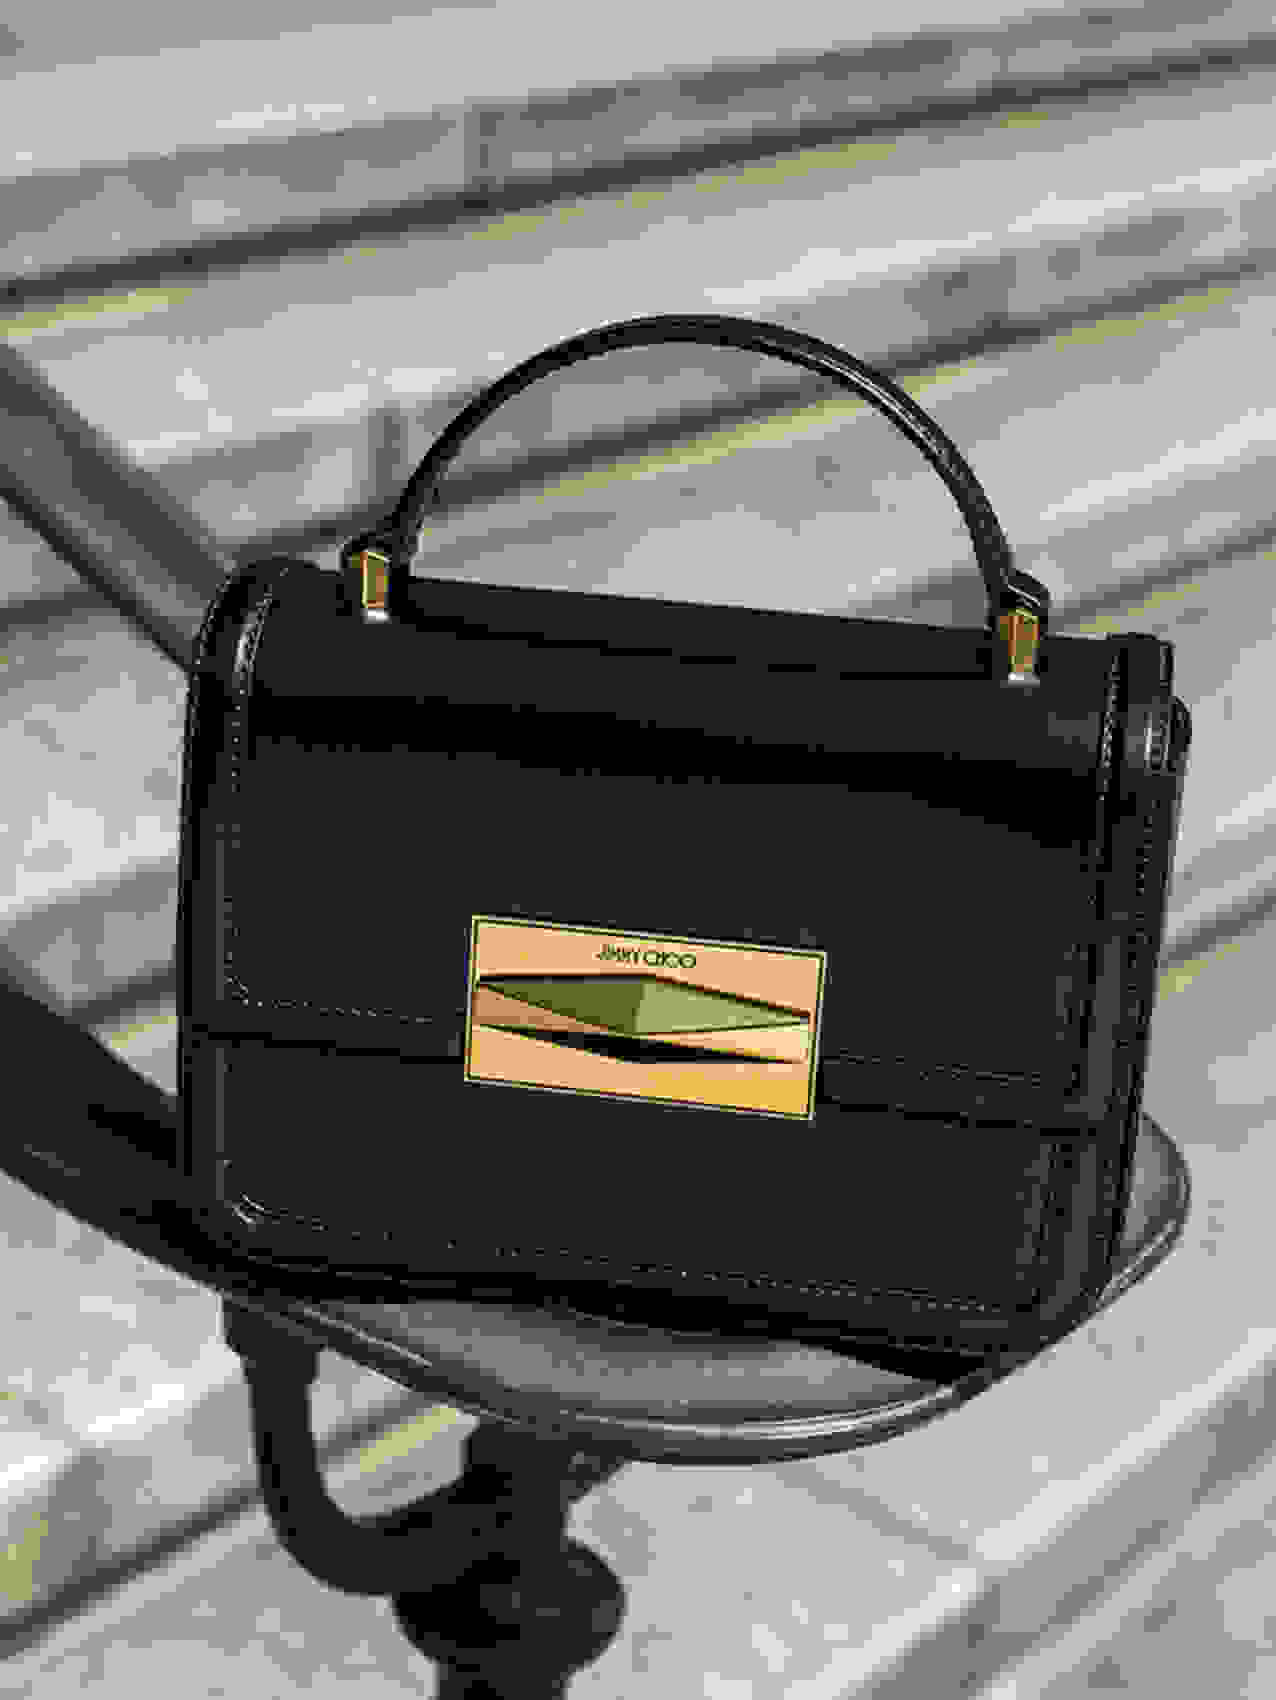 Jimmy Choo Diamond Crossbody handbag in black leather and brushed gold hardware.